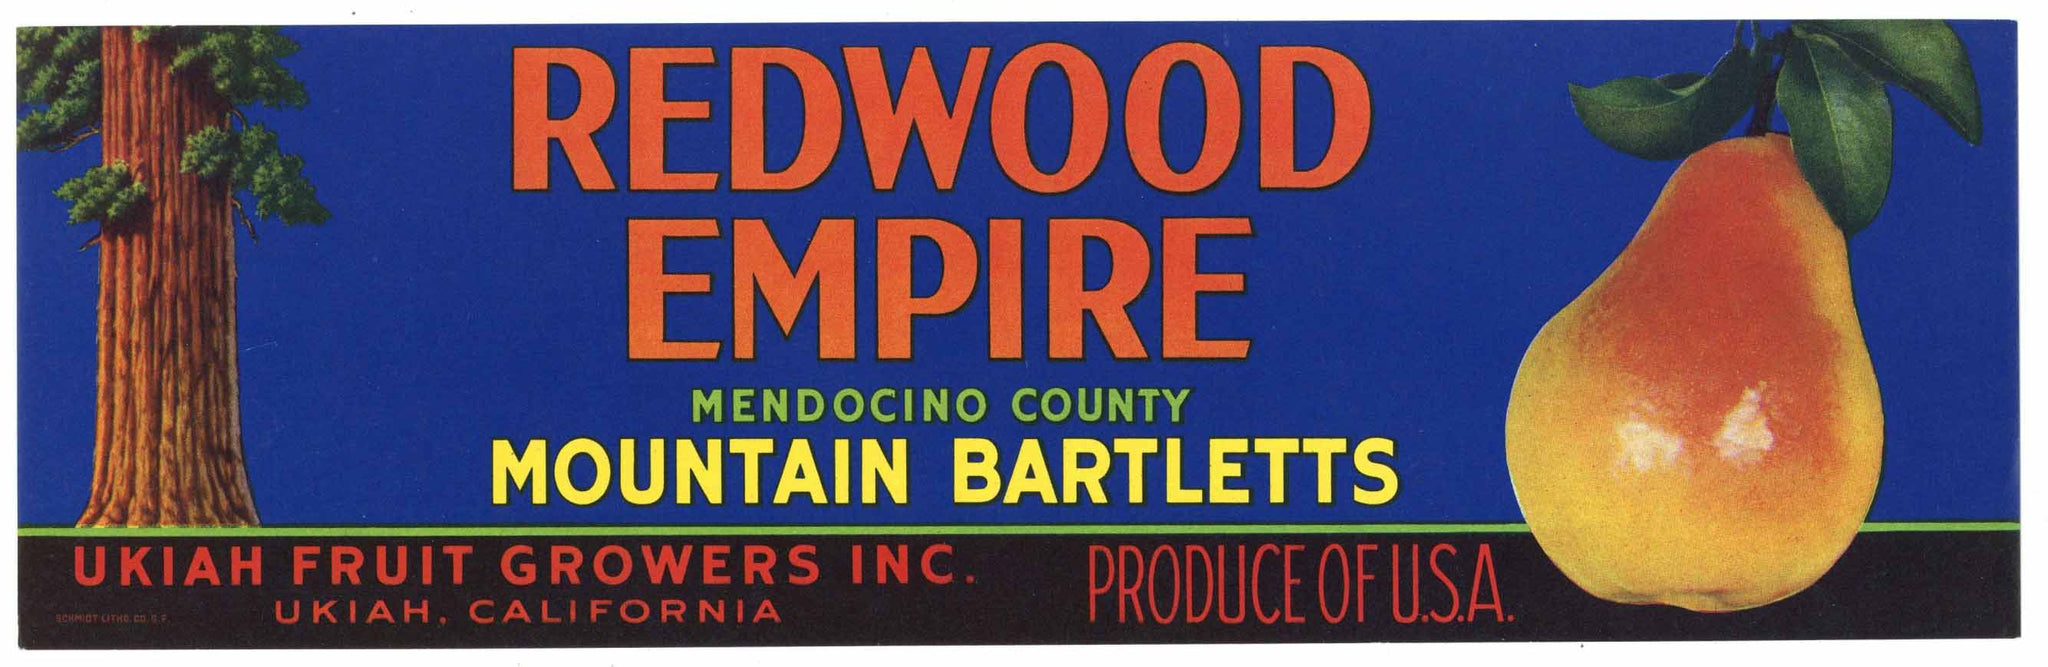 Redwood Empire Brand Vintage Ukiah Mendocino County Pear Crate Label